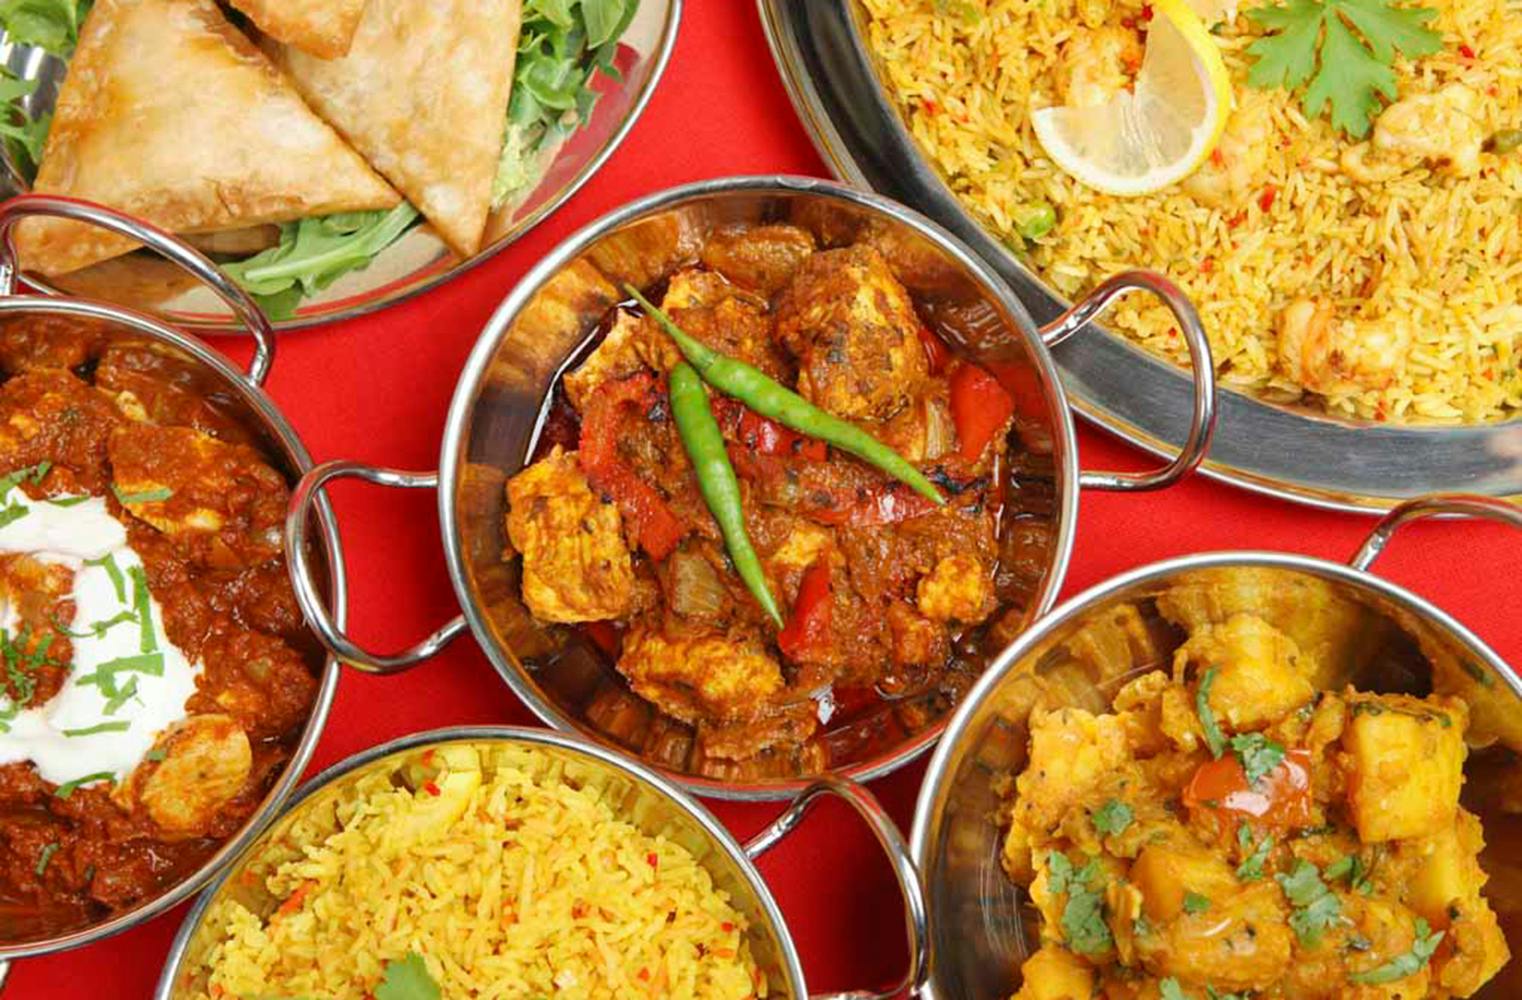 Indisch kochen lernen | Online-Kochkurs | duftende Gewürze